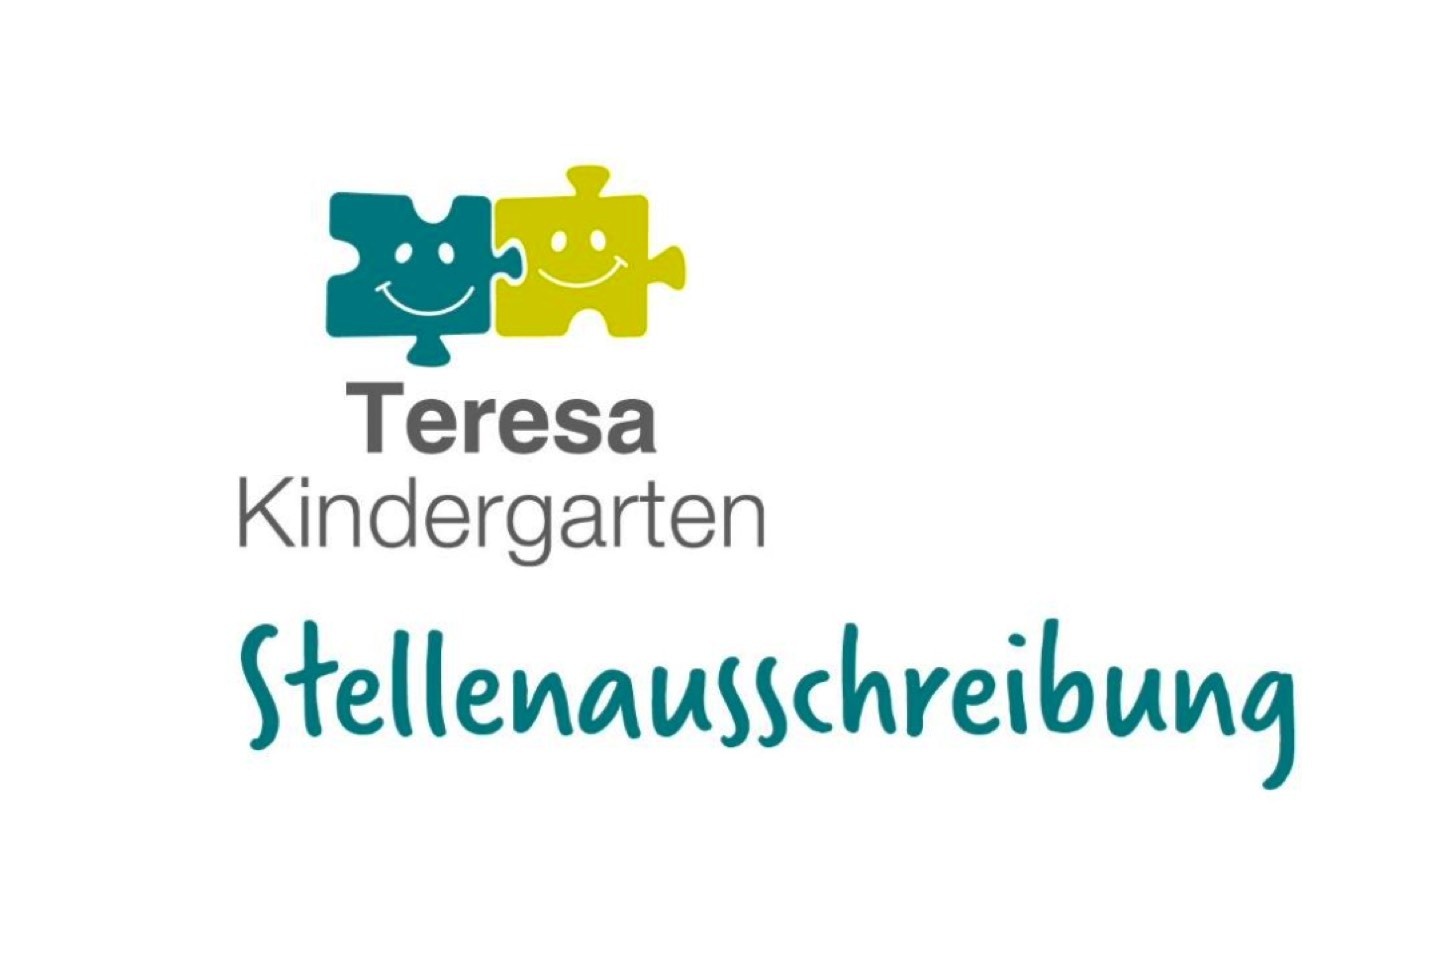 Teresa Kindergarten,Caritas,Stellenanzeige,Warendorf,